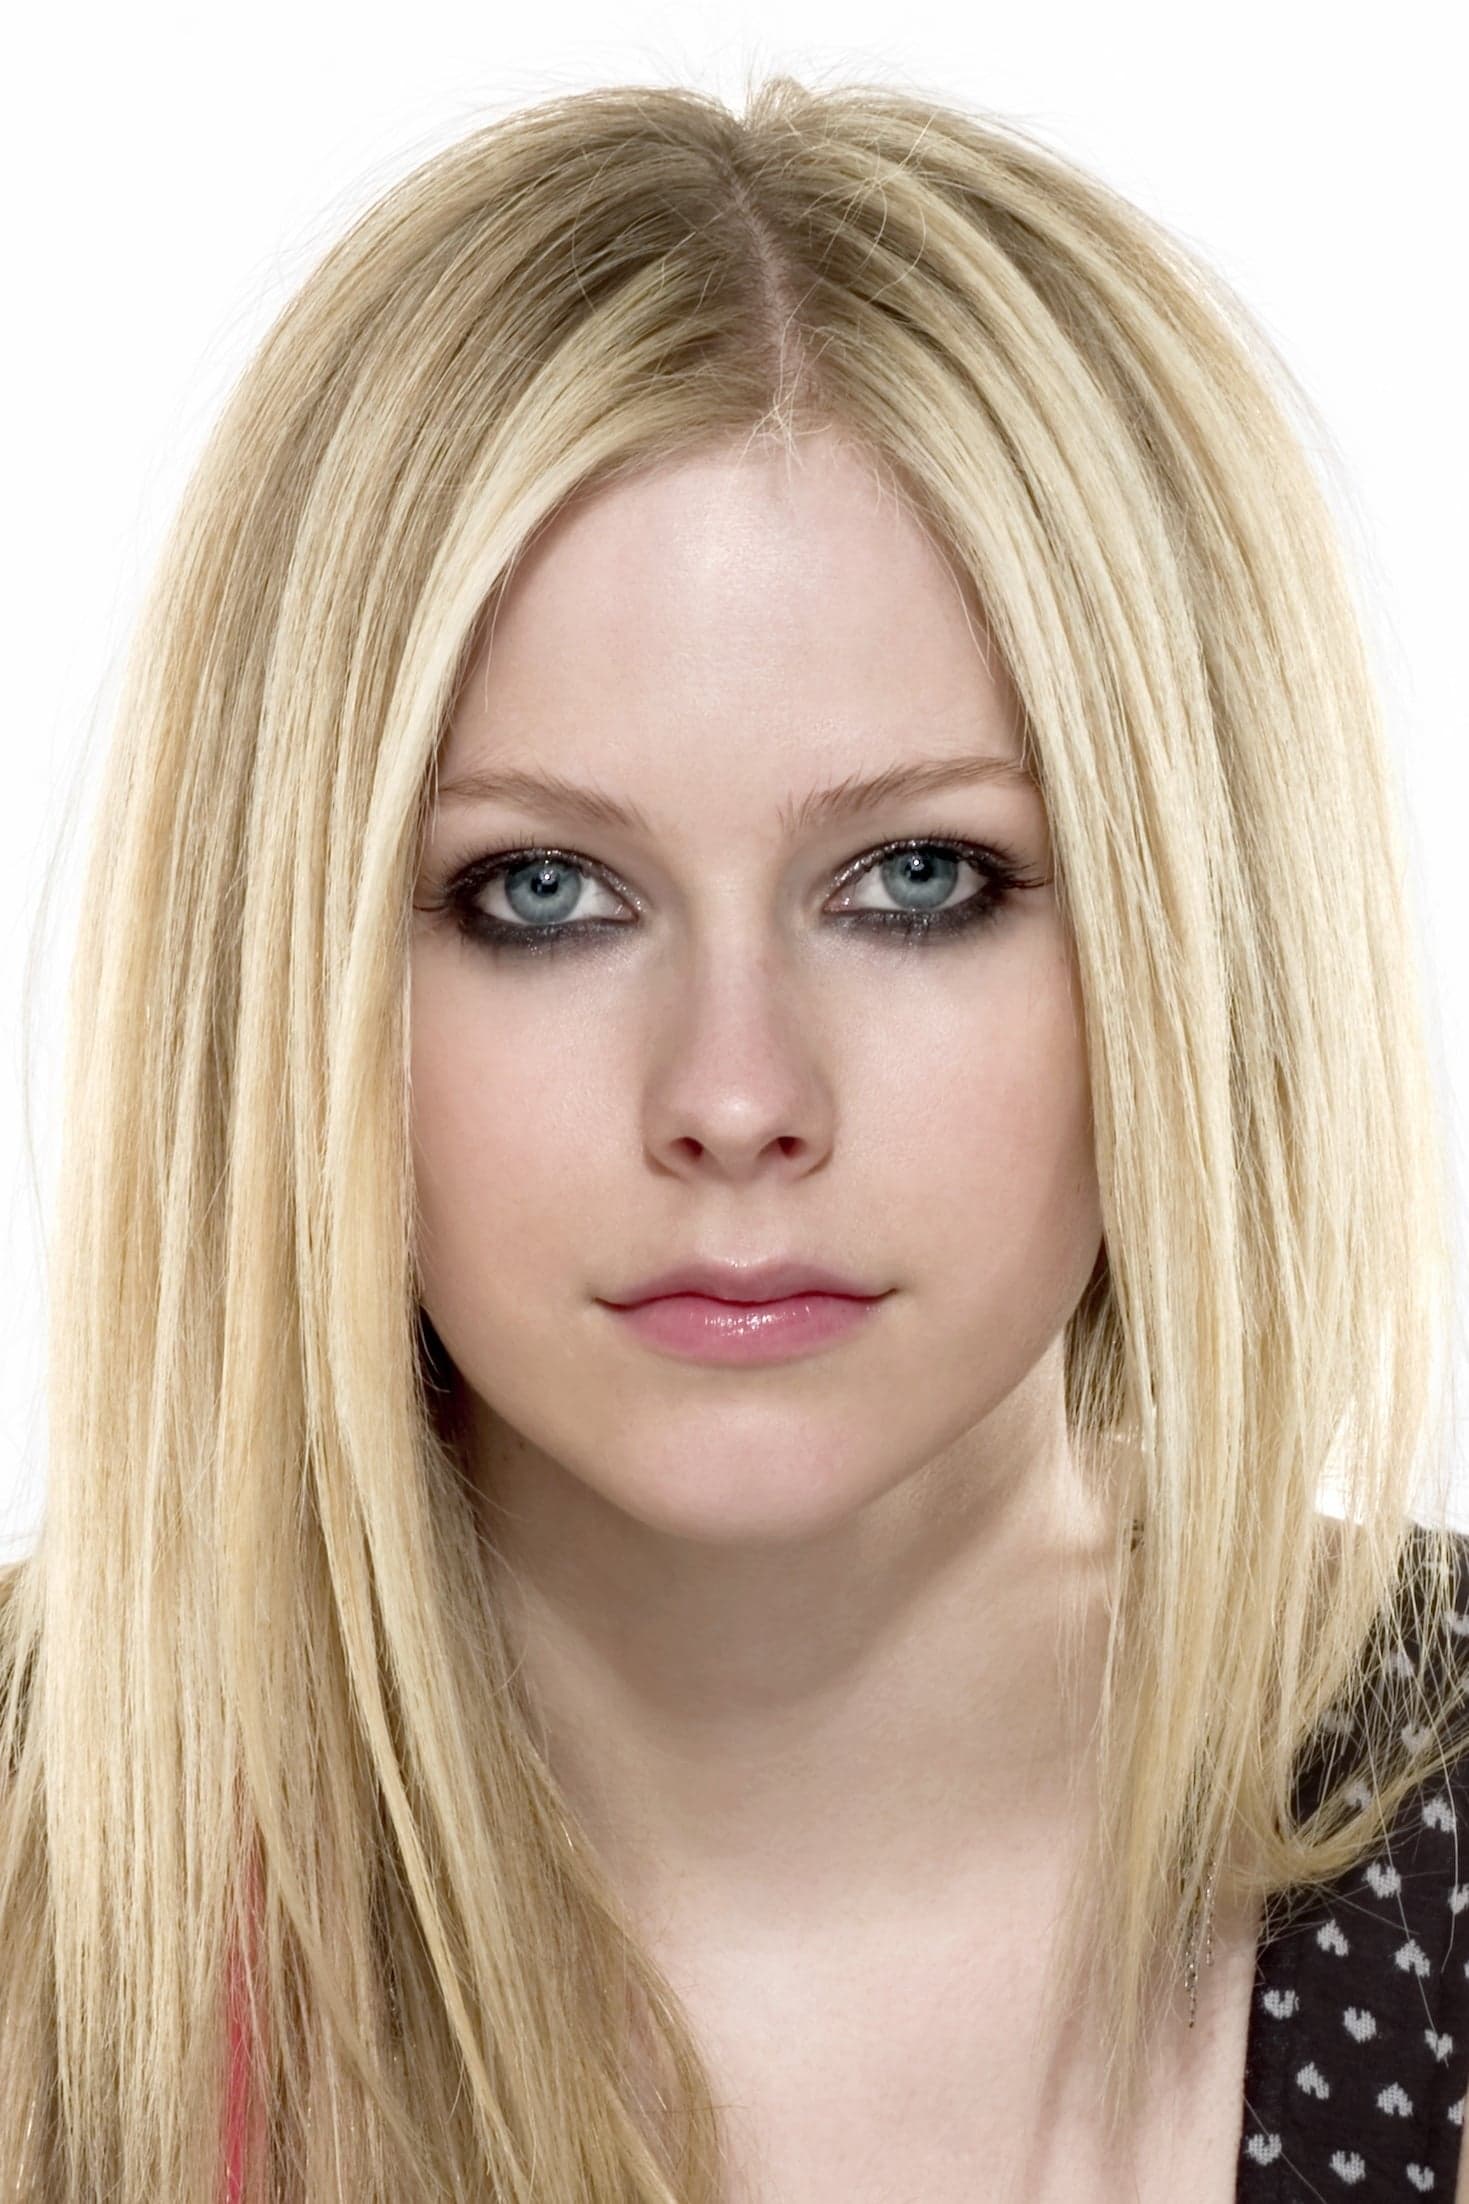 Avril Lavigne | Self